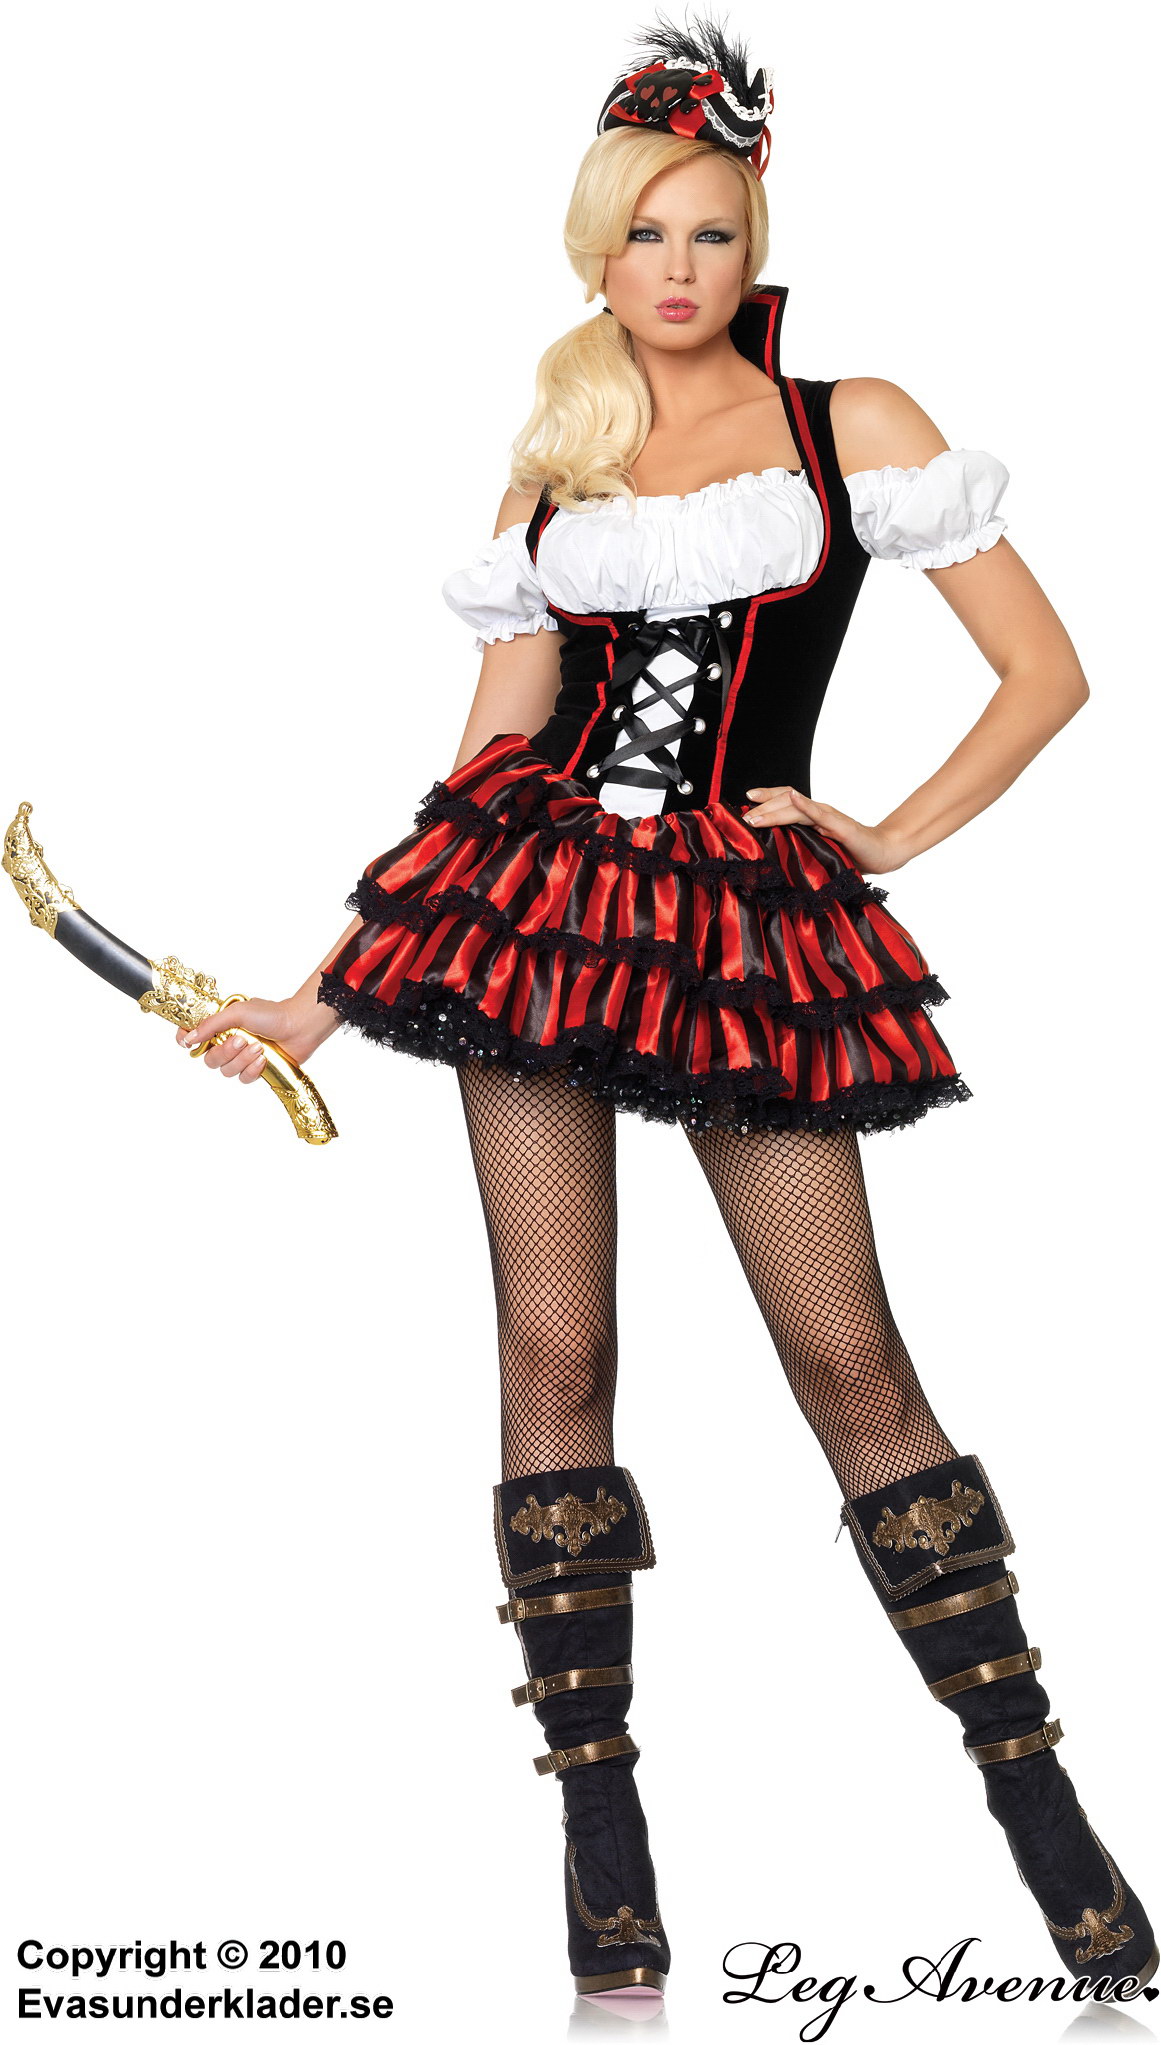 Shipwreck Pirate costume